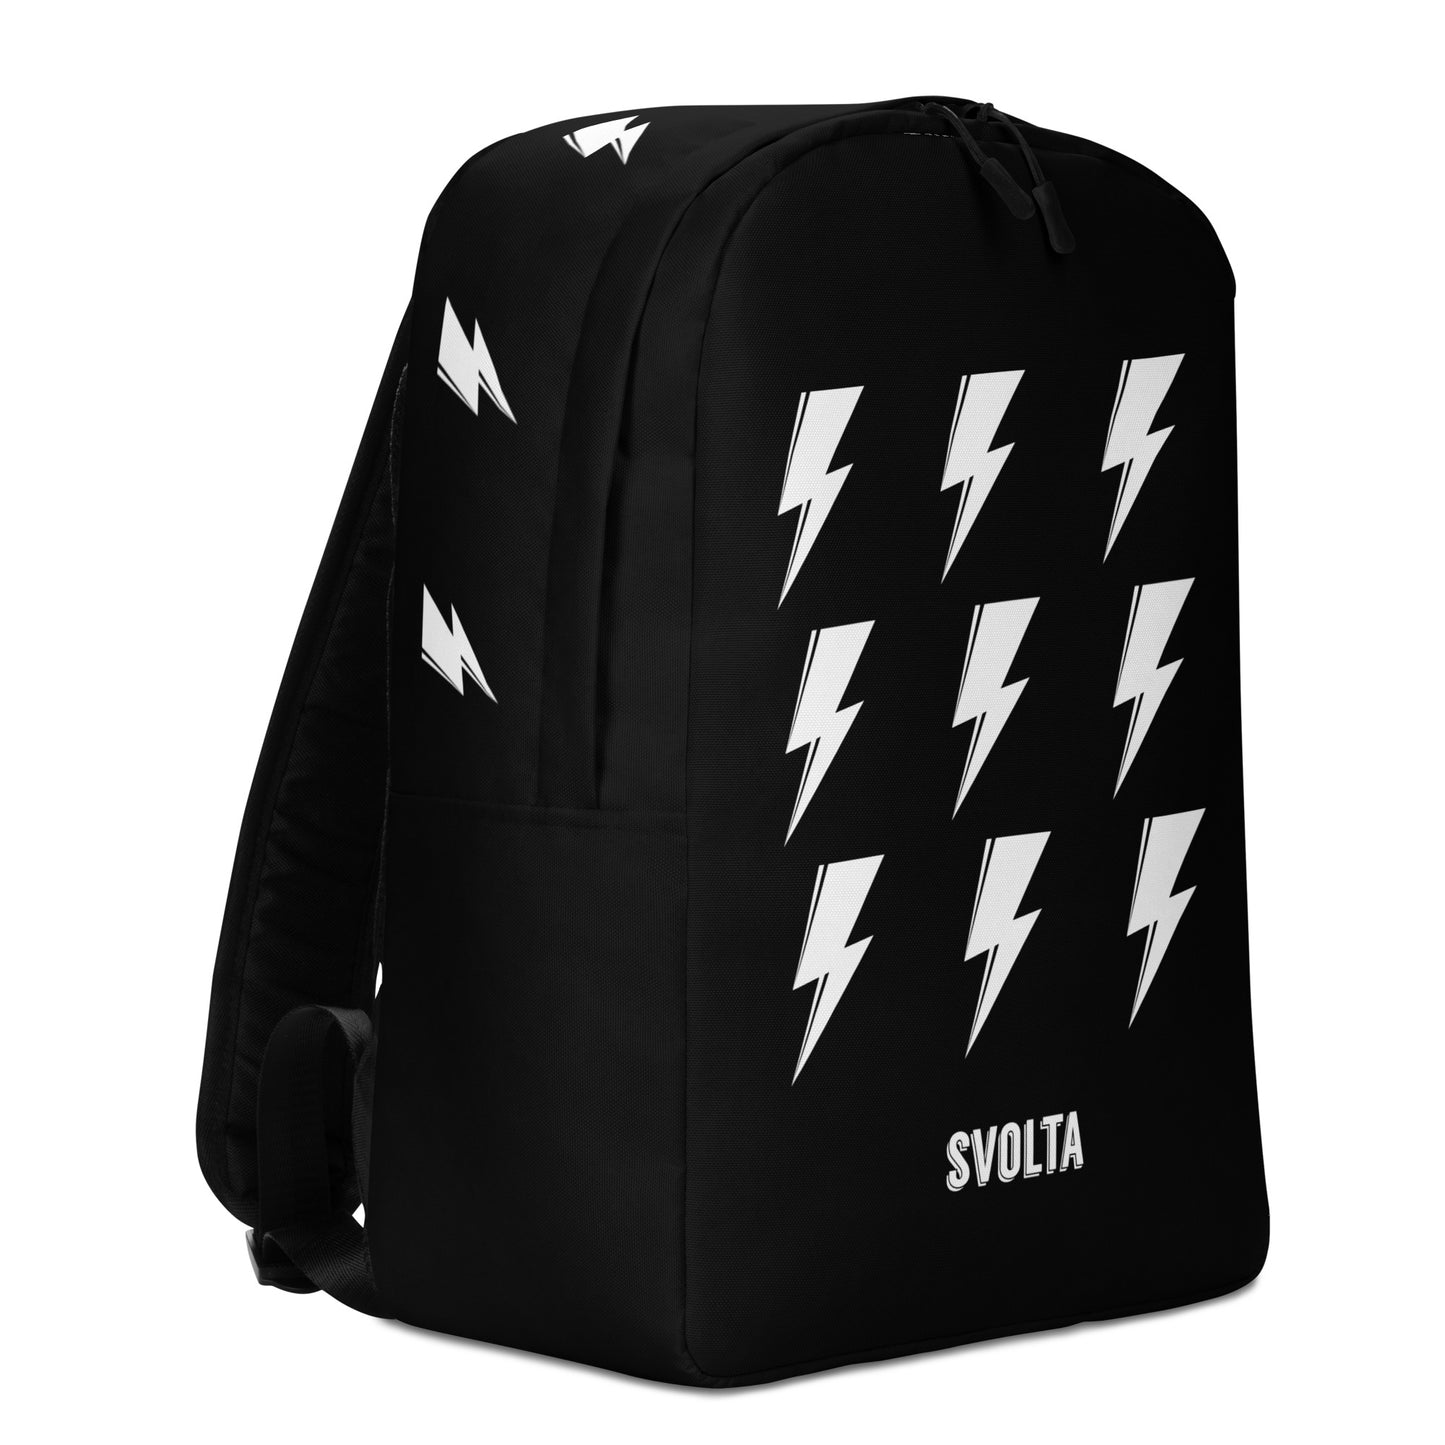 SVOLTA 9 Bolts Minimalist Backpack - Black and White